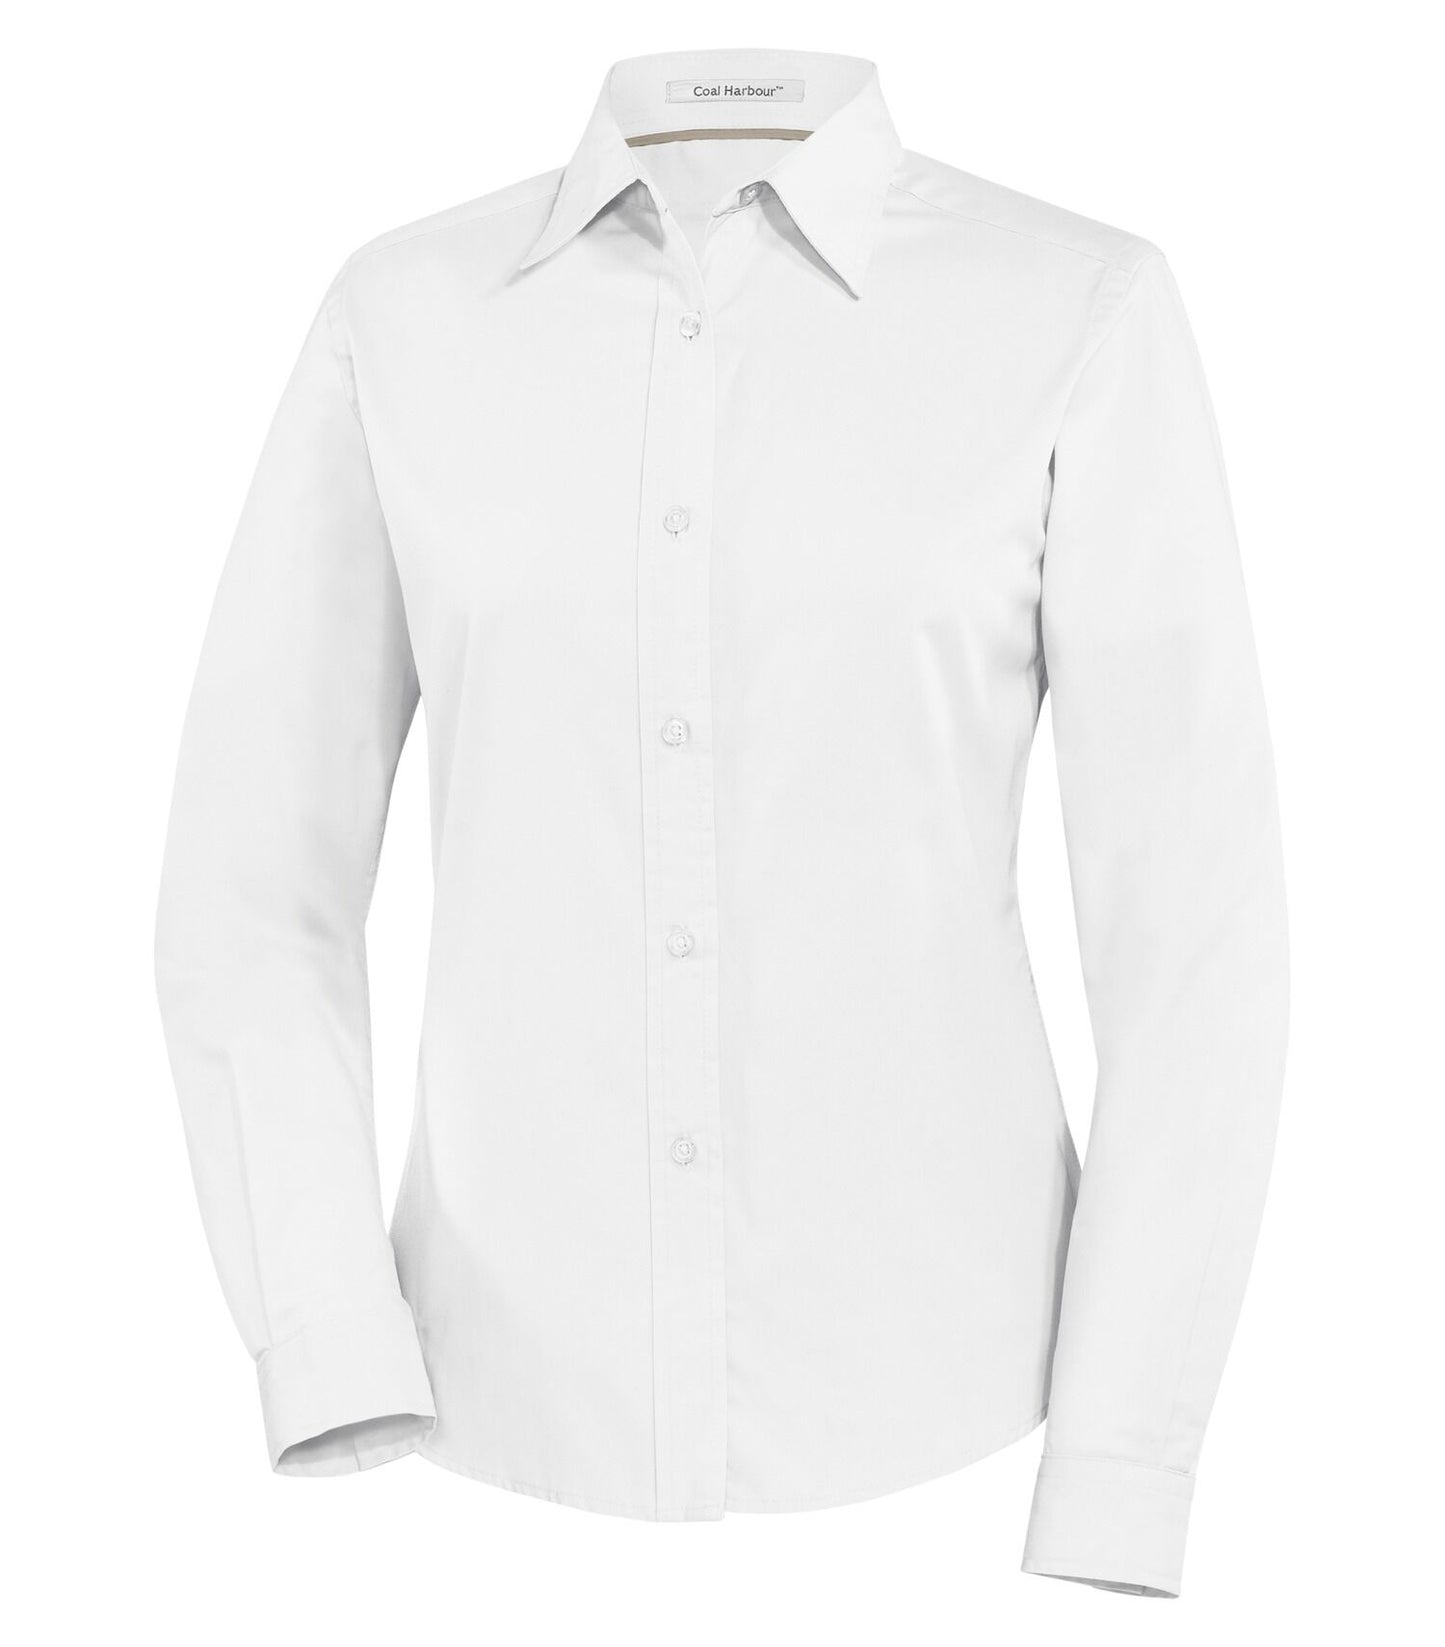 Carbón Harbor-L610 Camisa de manga larga de manga larga Mezcla de fácil cuidado para las mujeres